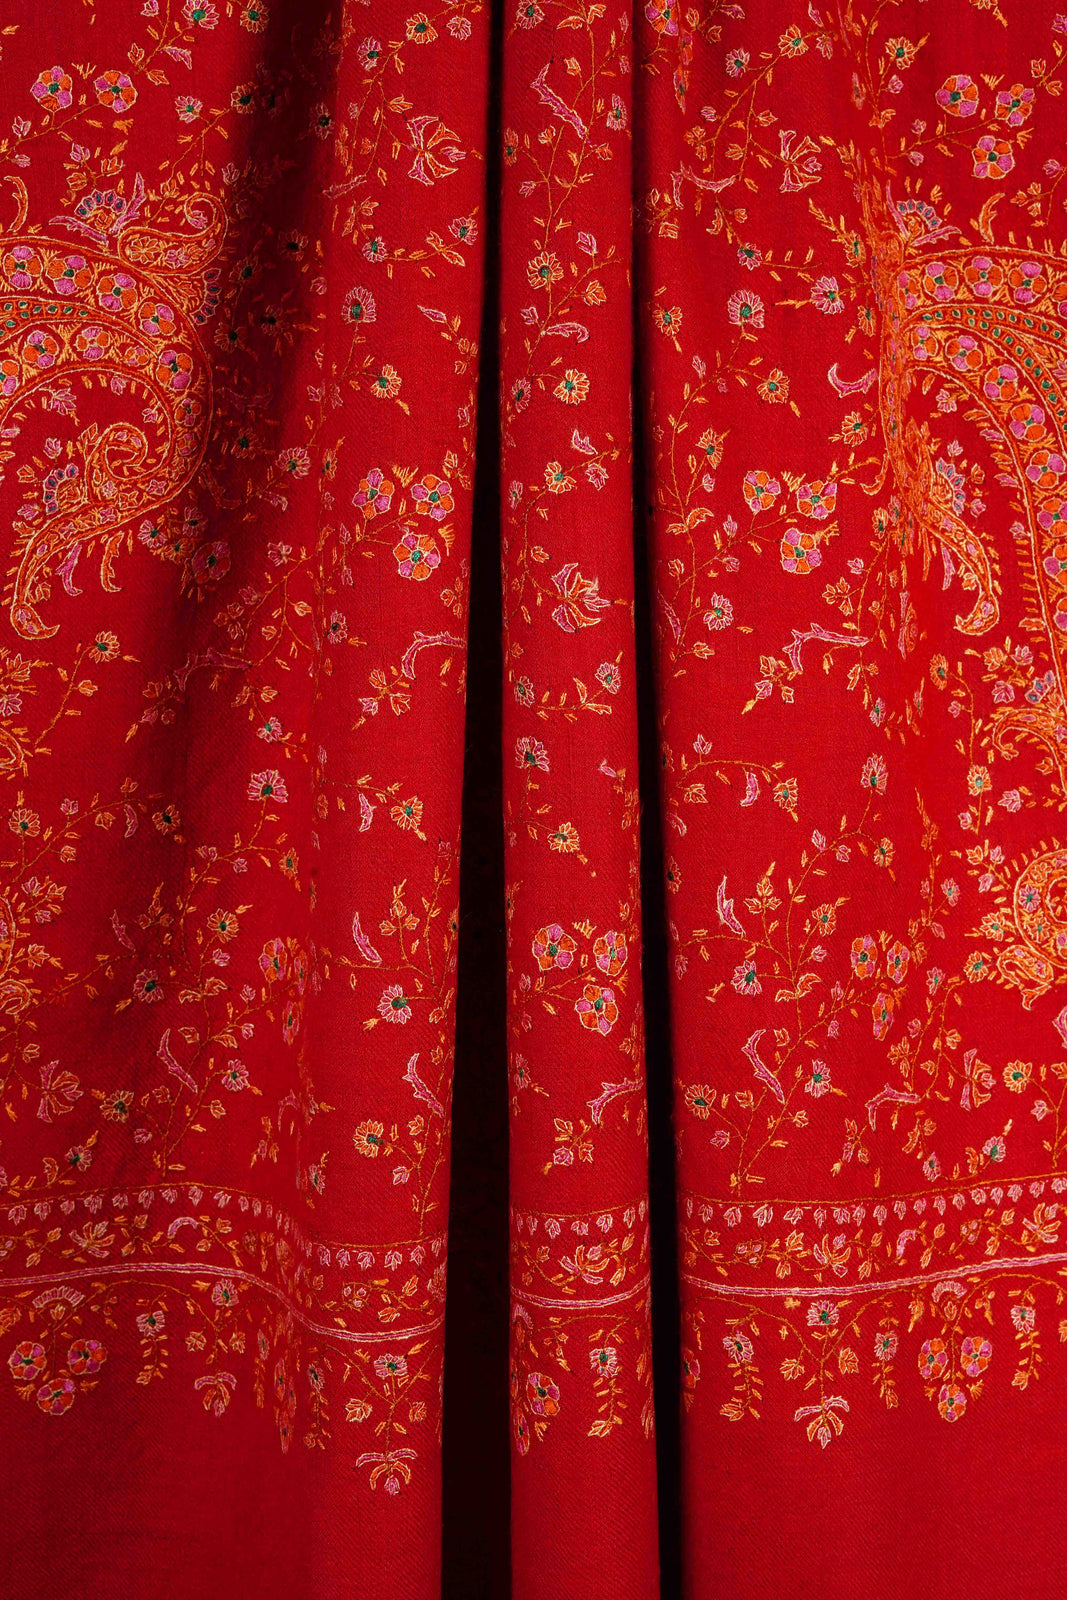 Red Jali Embroidery Pashmina Cashmere Shawl